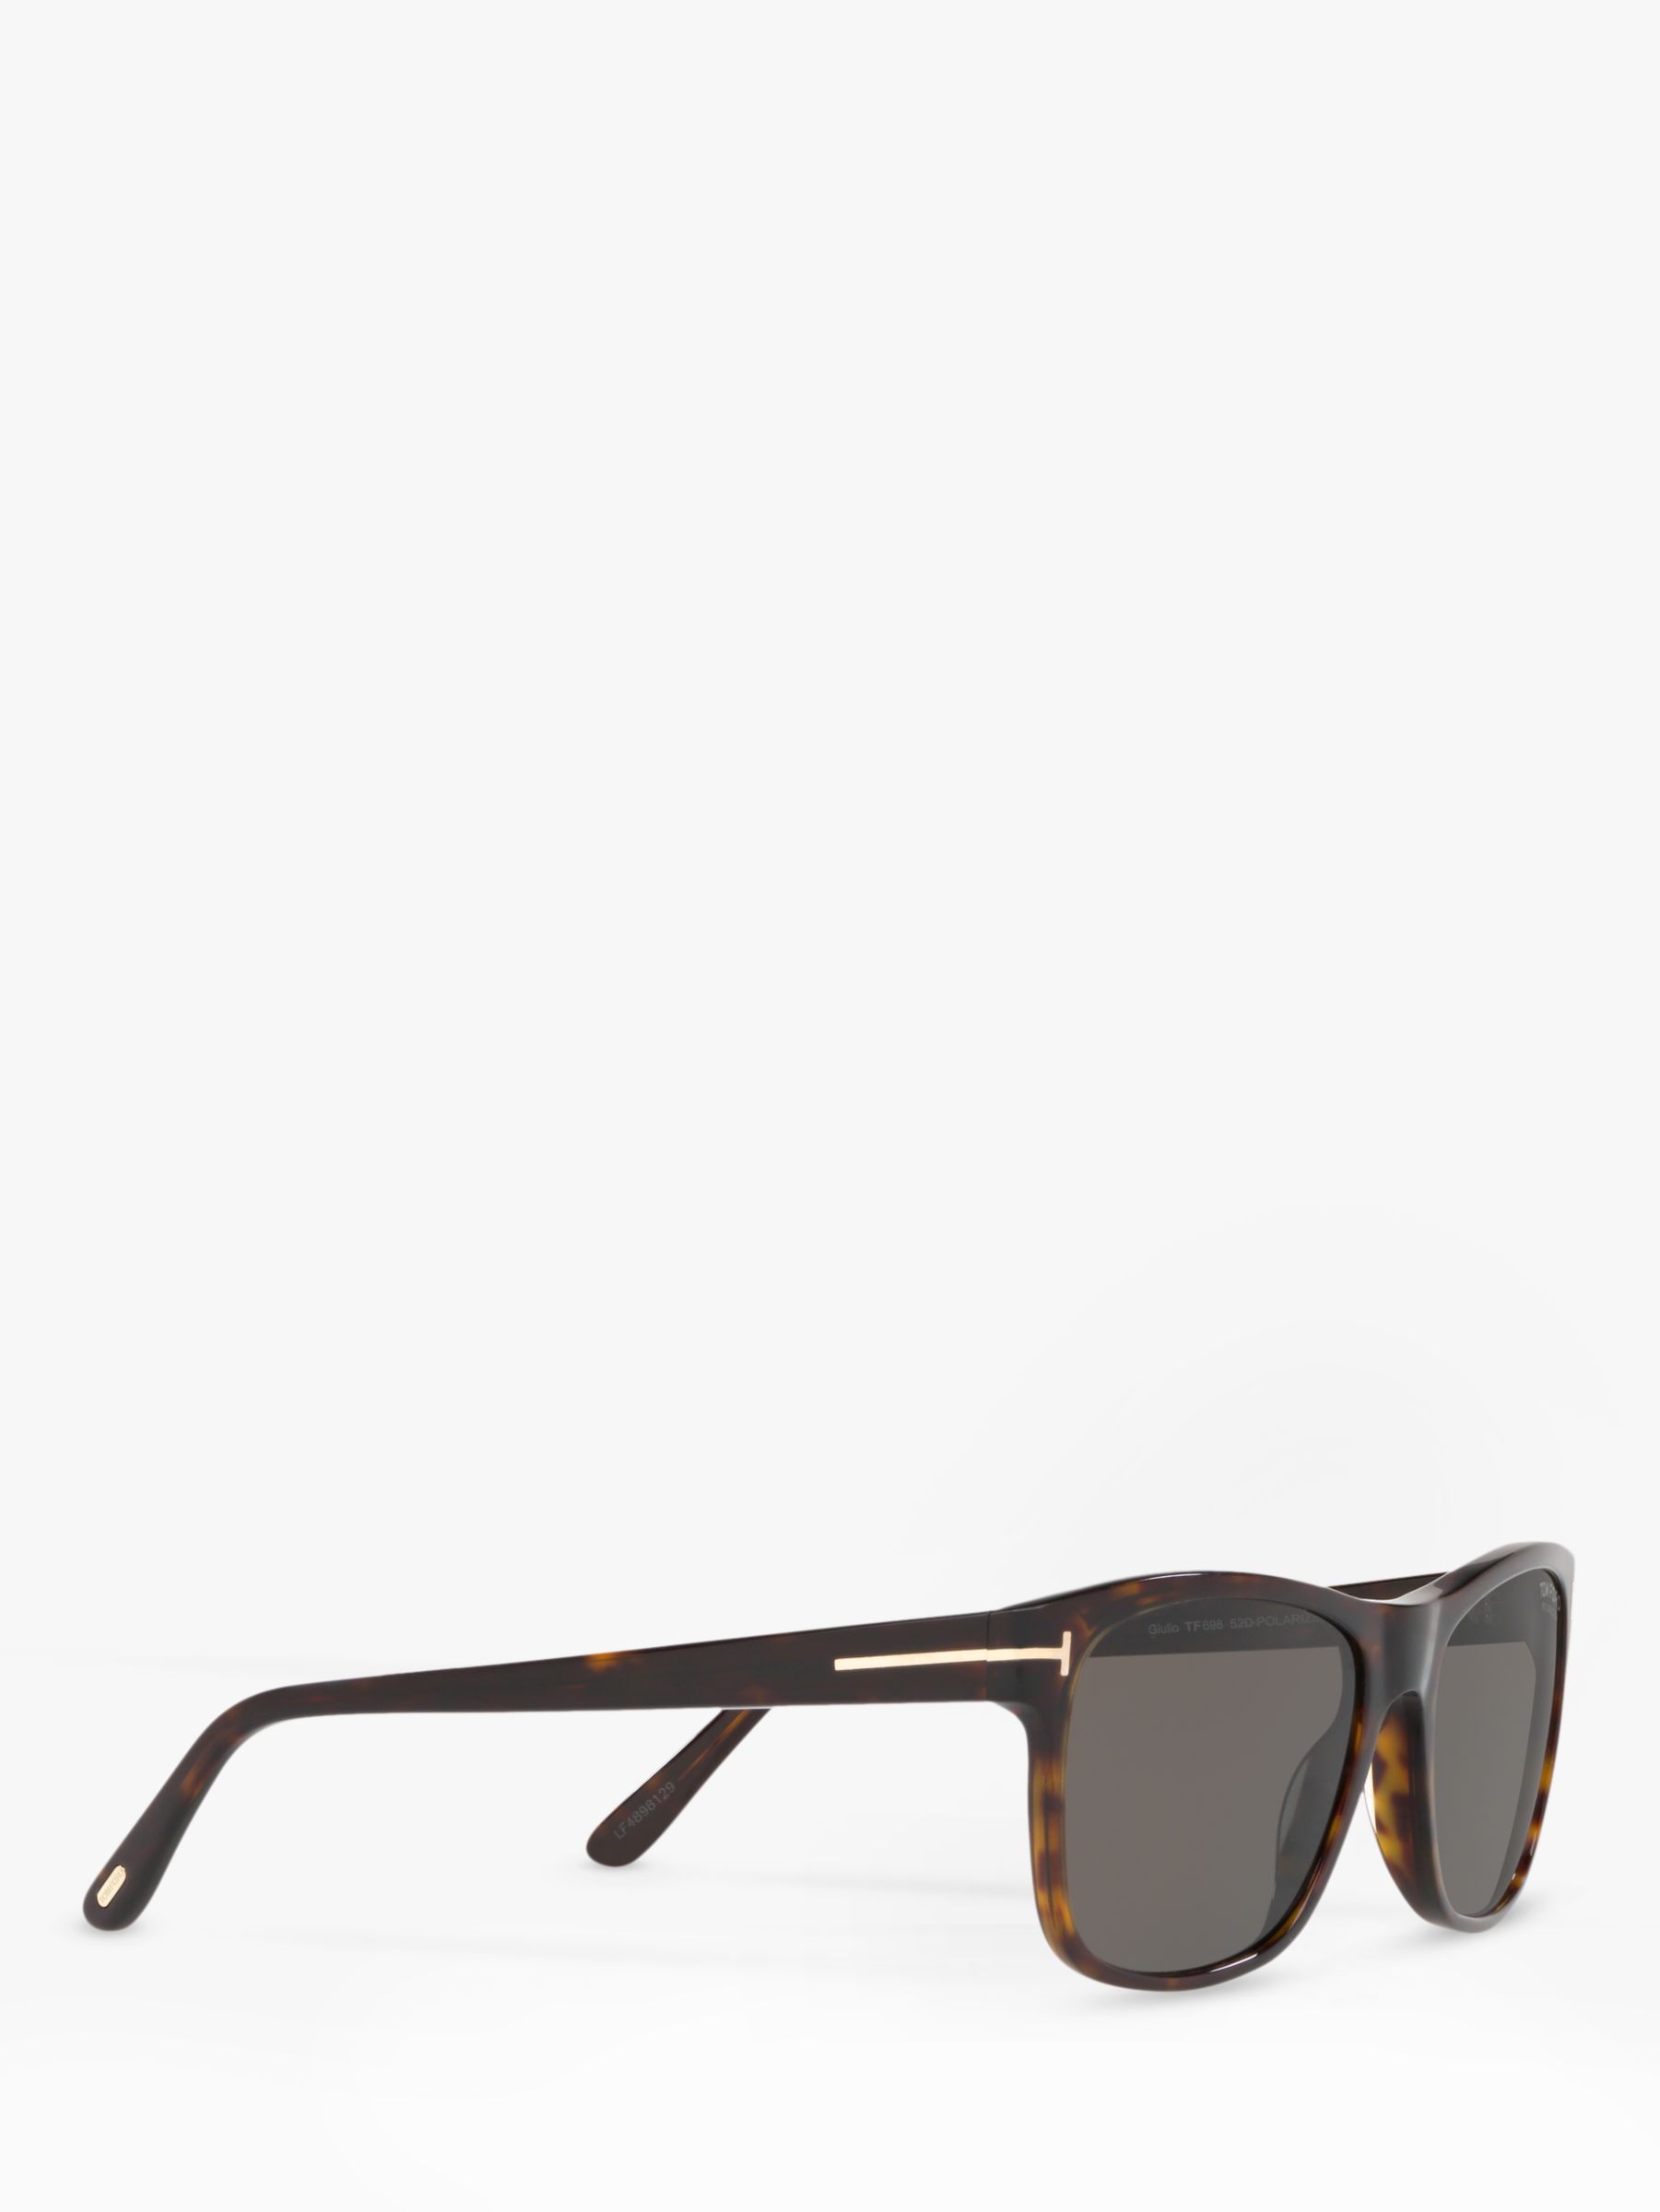 FORD FT0698 Men's Giulio Polarised Square Sunglasses, Tortoise/Grey at Lewis & Partners